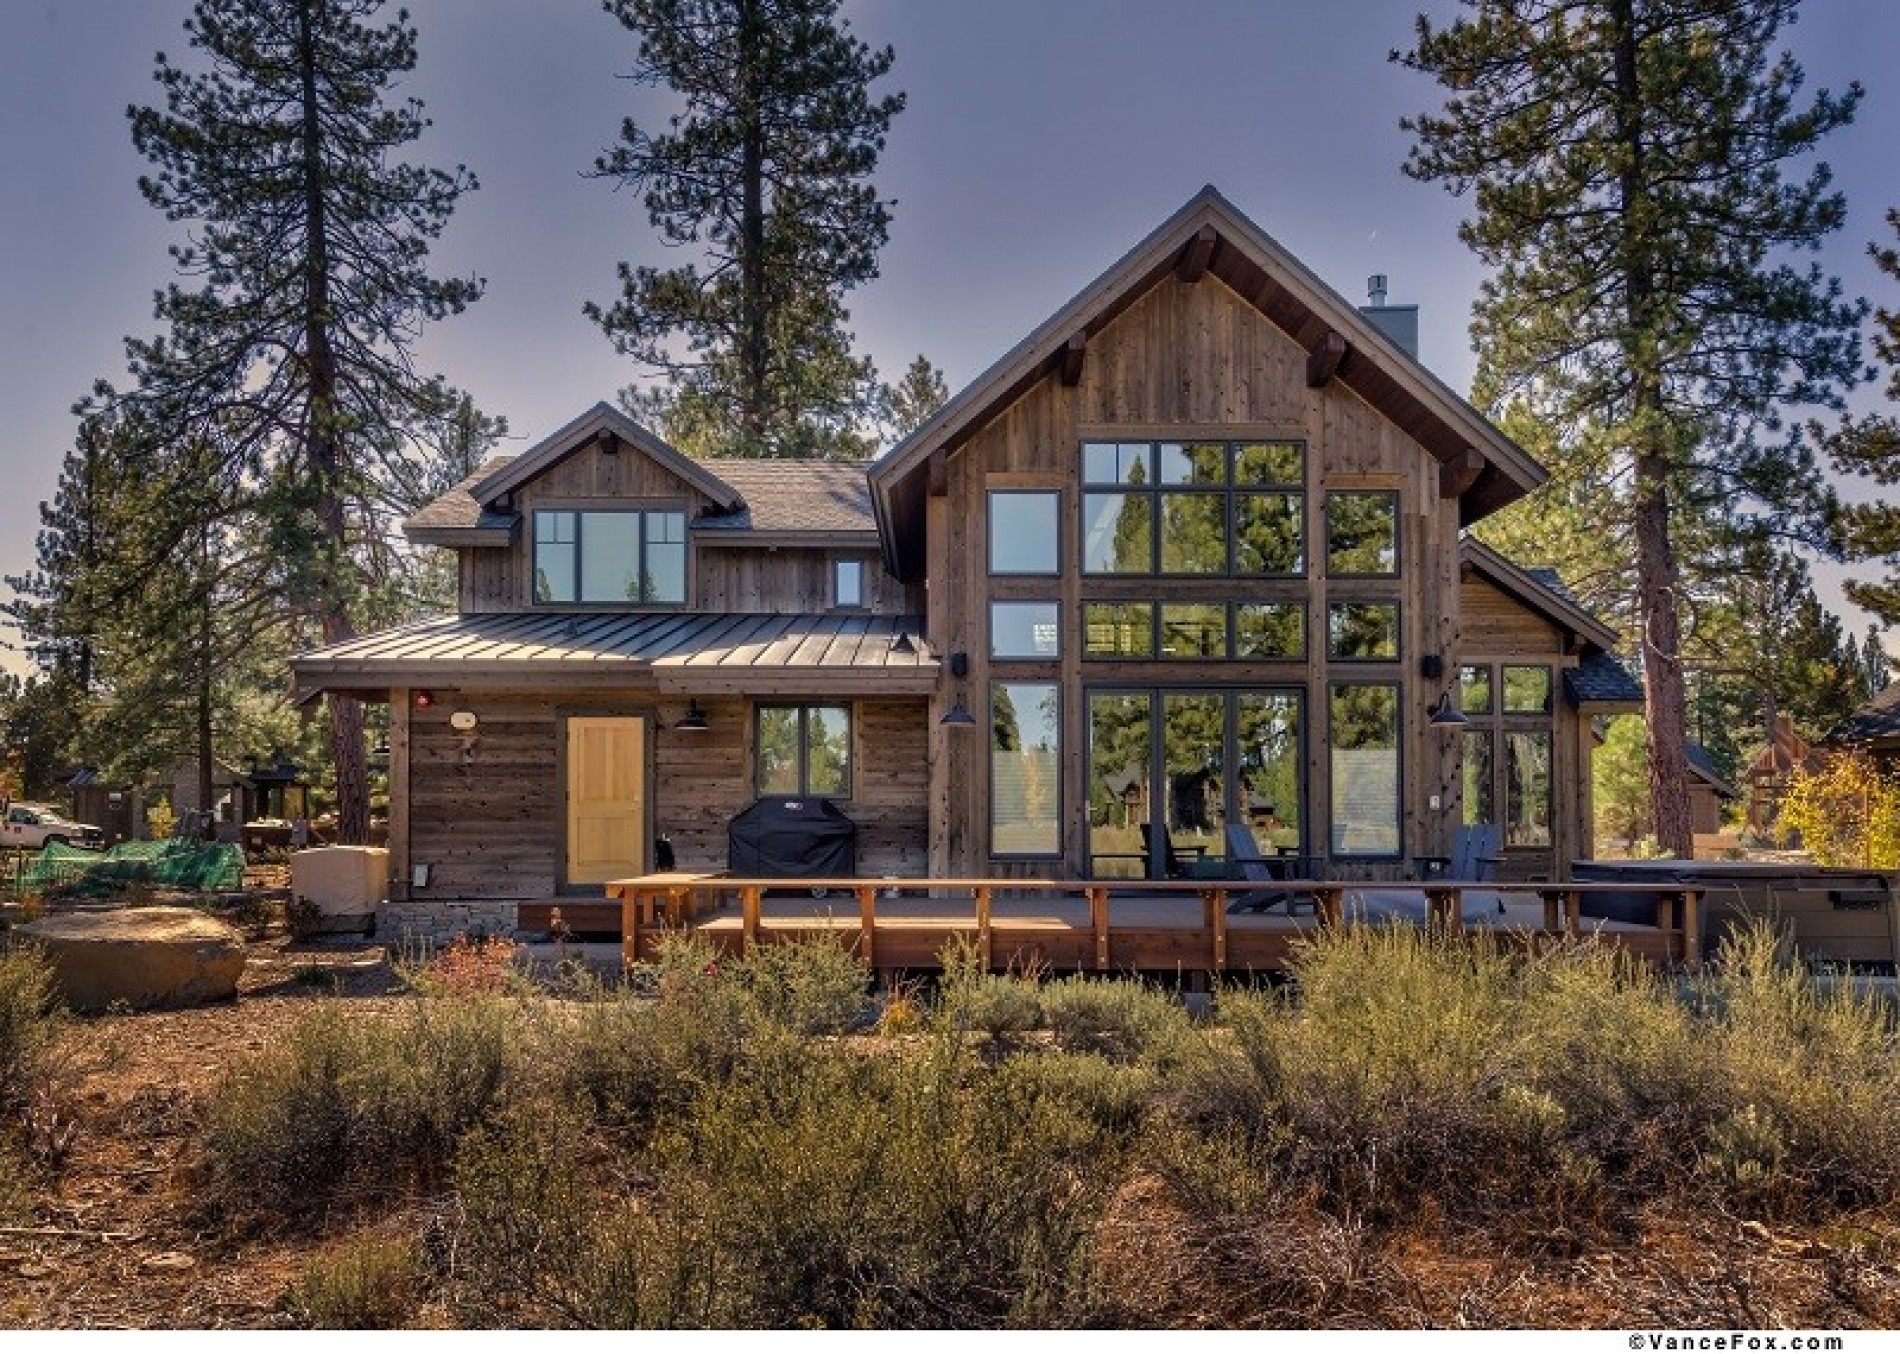 Lake Tahoe Mountain Home - Alpine Style and Decor